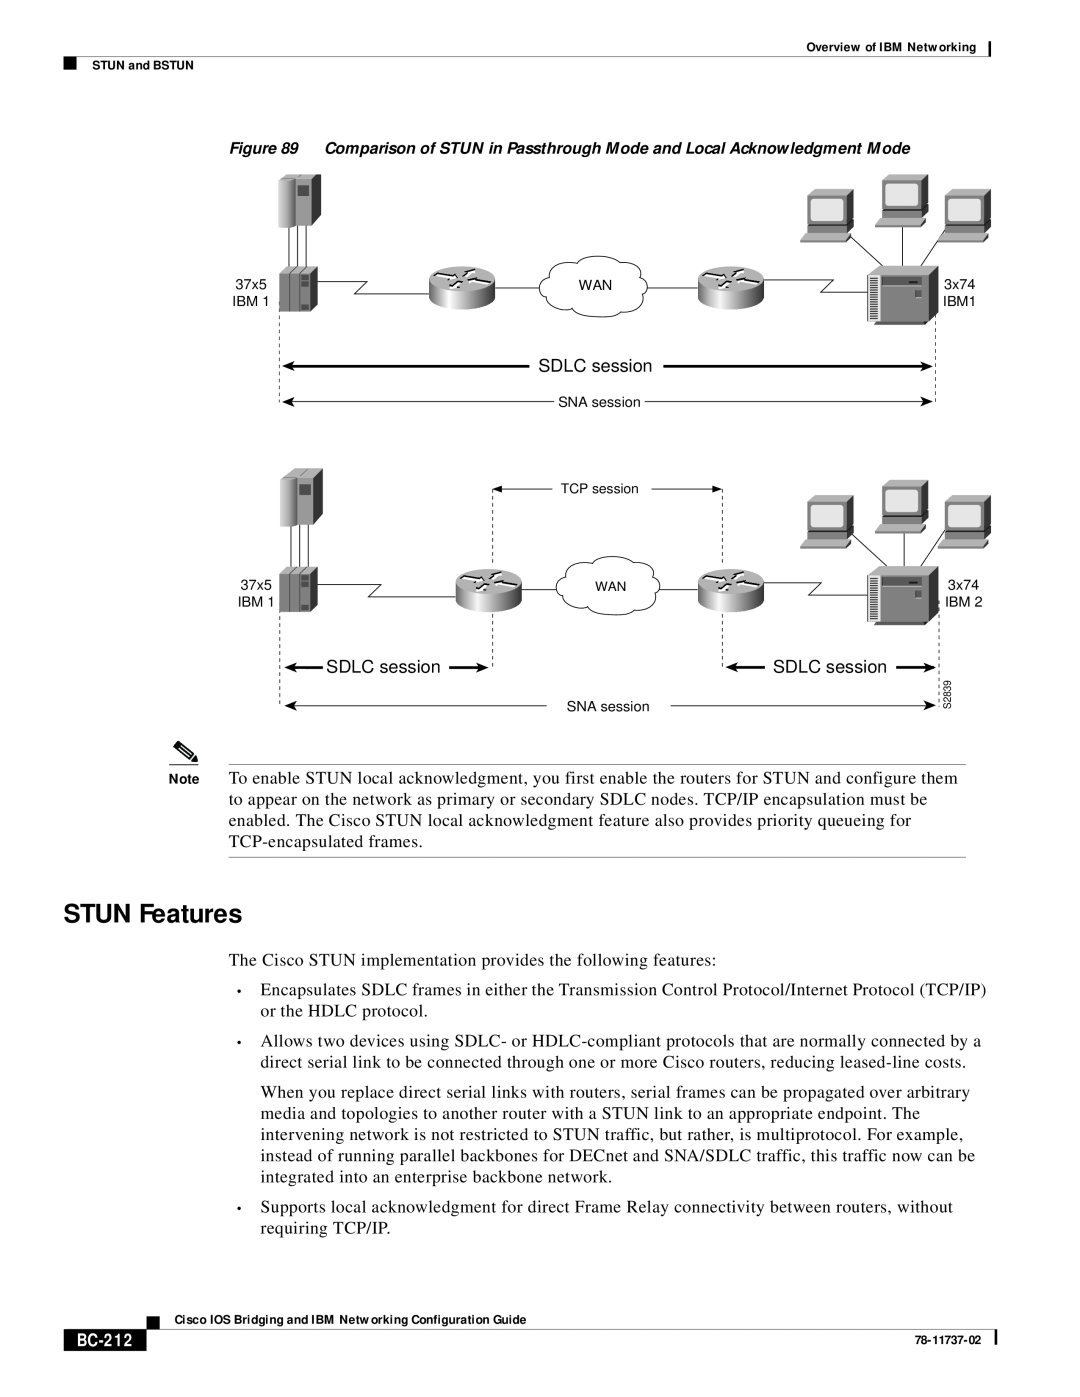 IBM BC-201 manual STUN Features, BC-212 